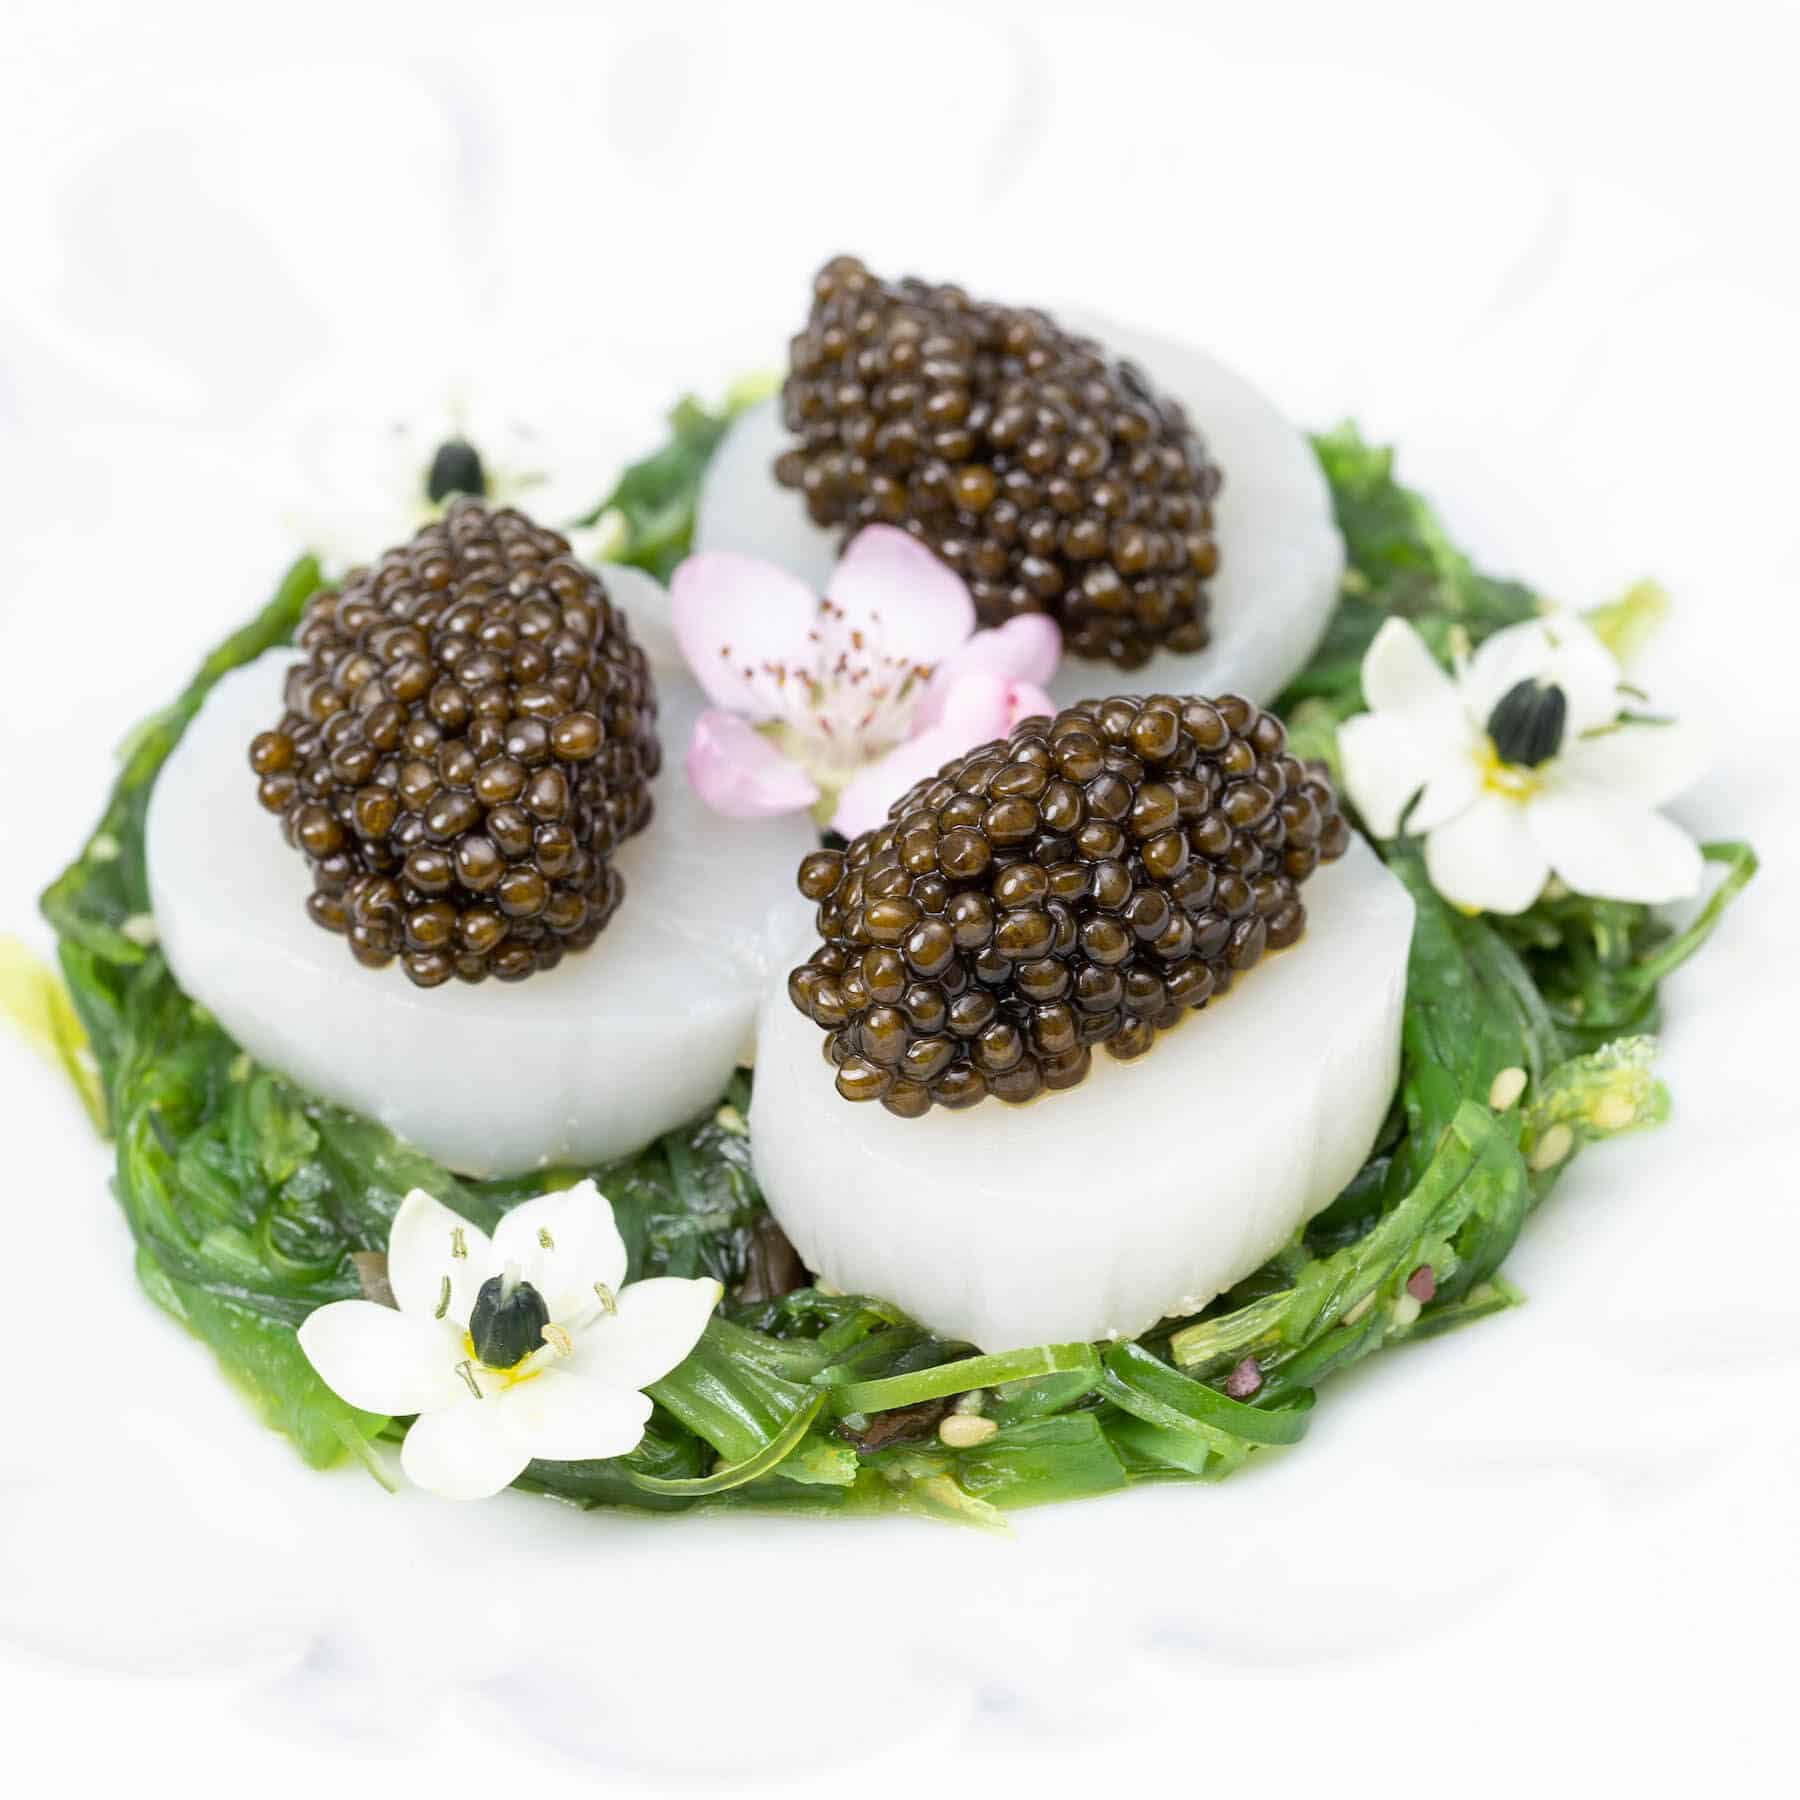 Sturgeon Caviar AMUR ROYAL, 50g